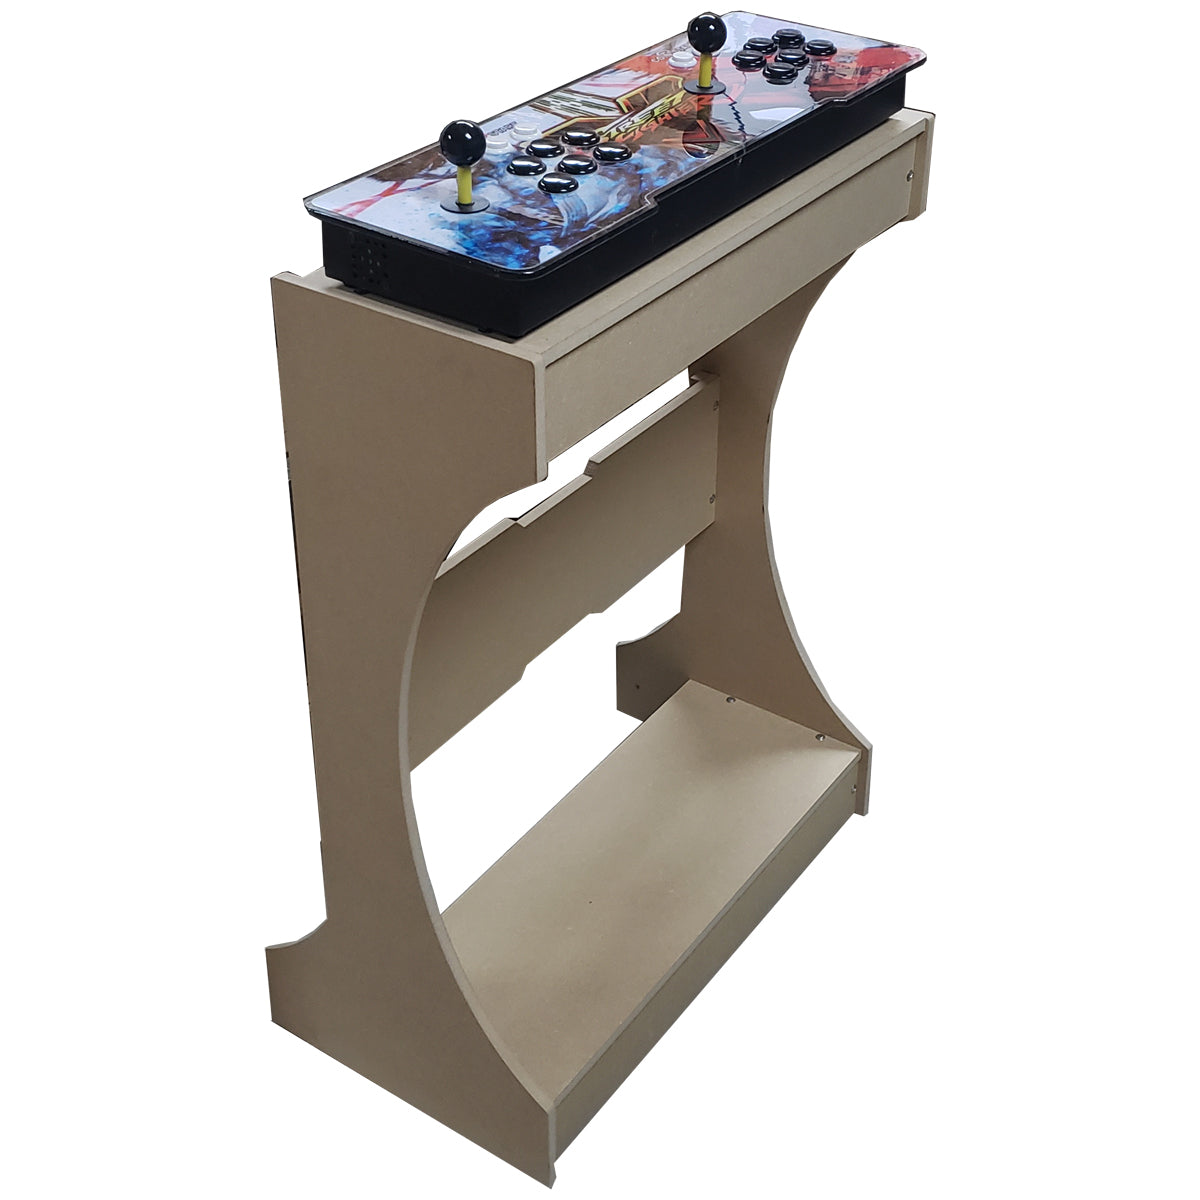 TPAP Arcade Pedestal Kit for the Tankstick Pandora's Box  LVL2GO and other joystick units